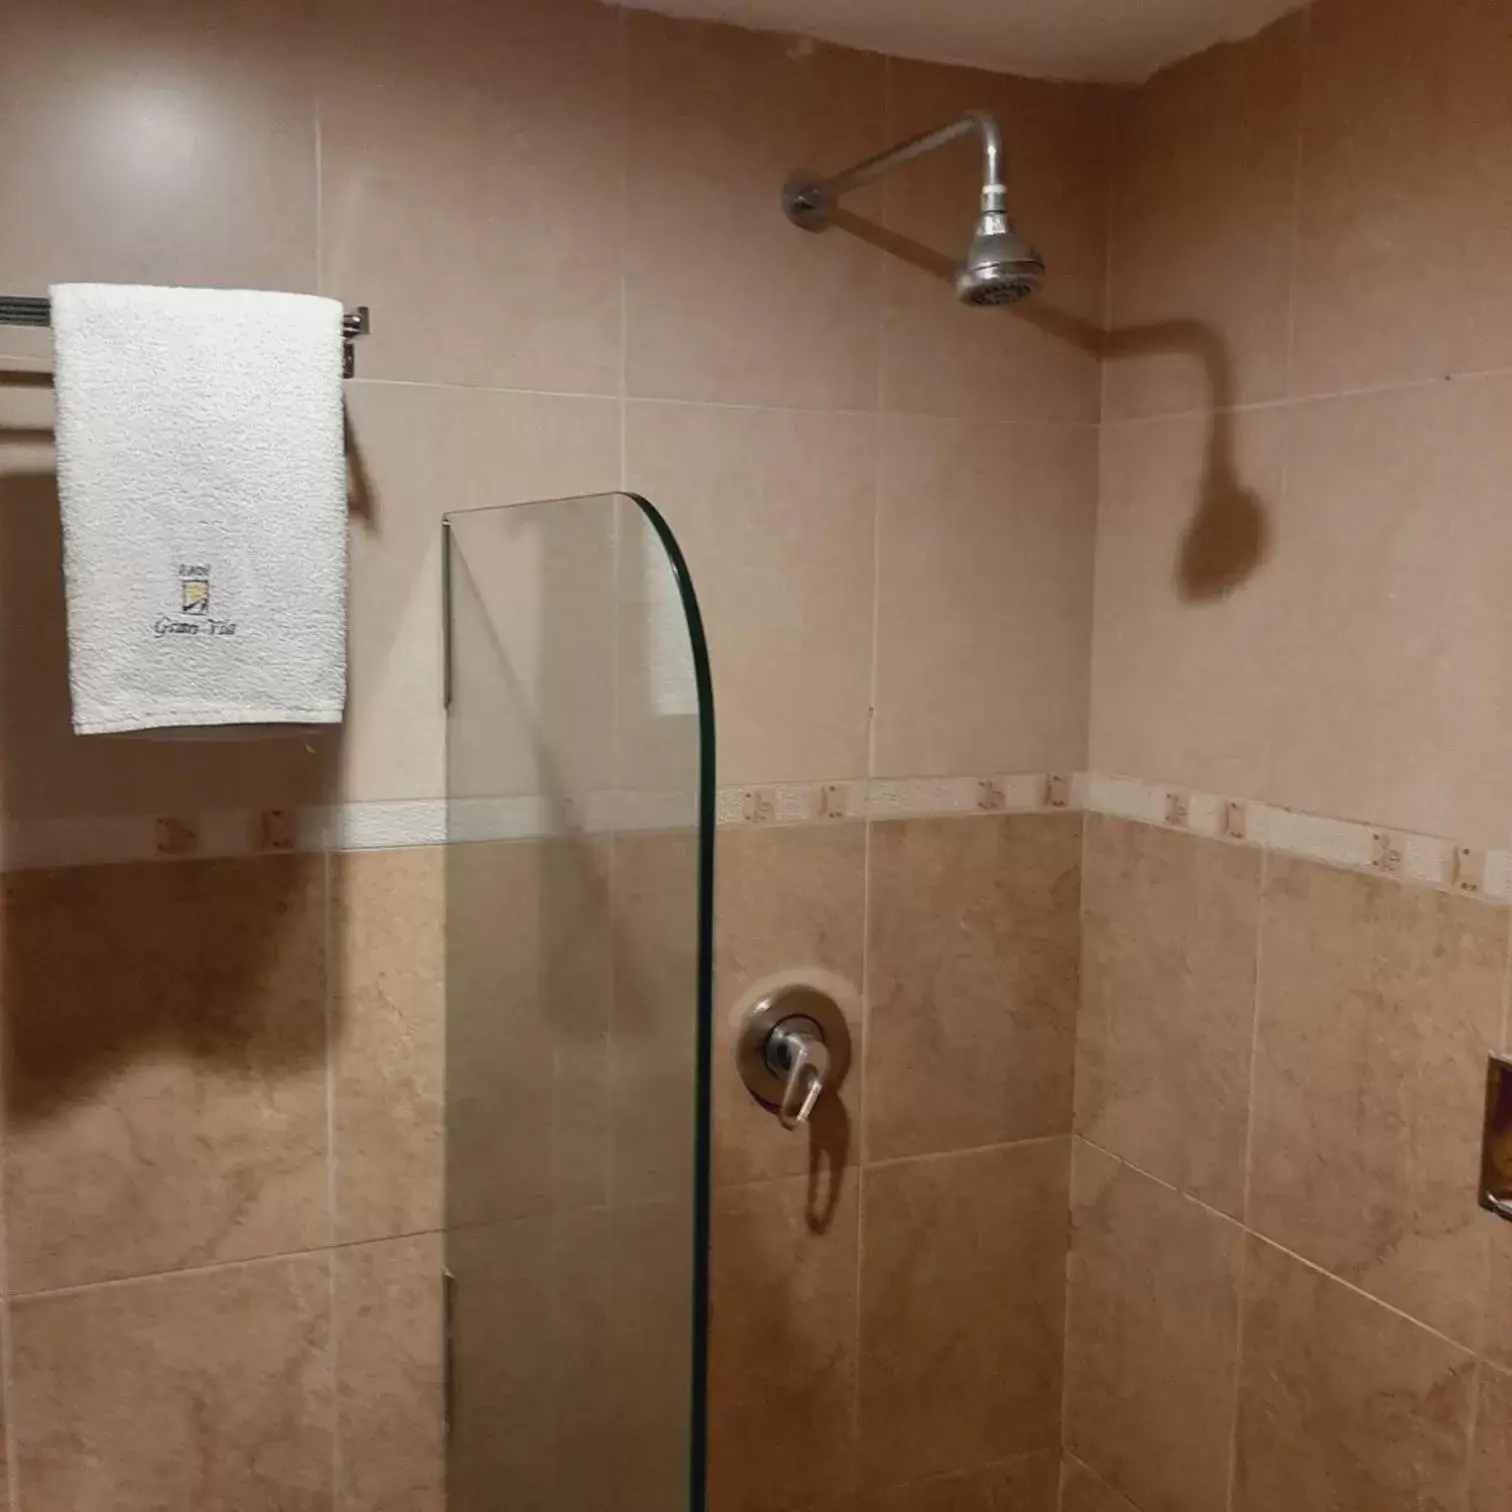 Bathroom in Hotel Gran Via - Centro